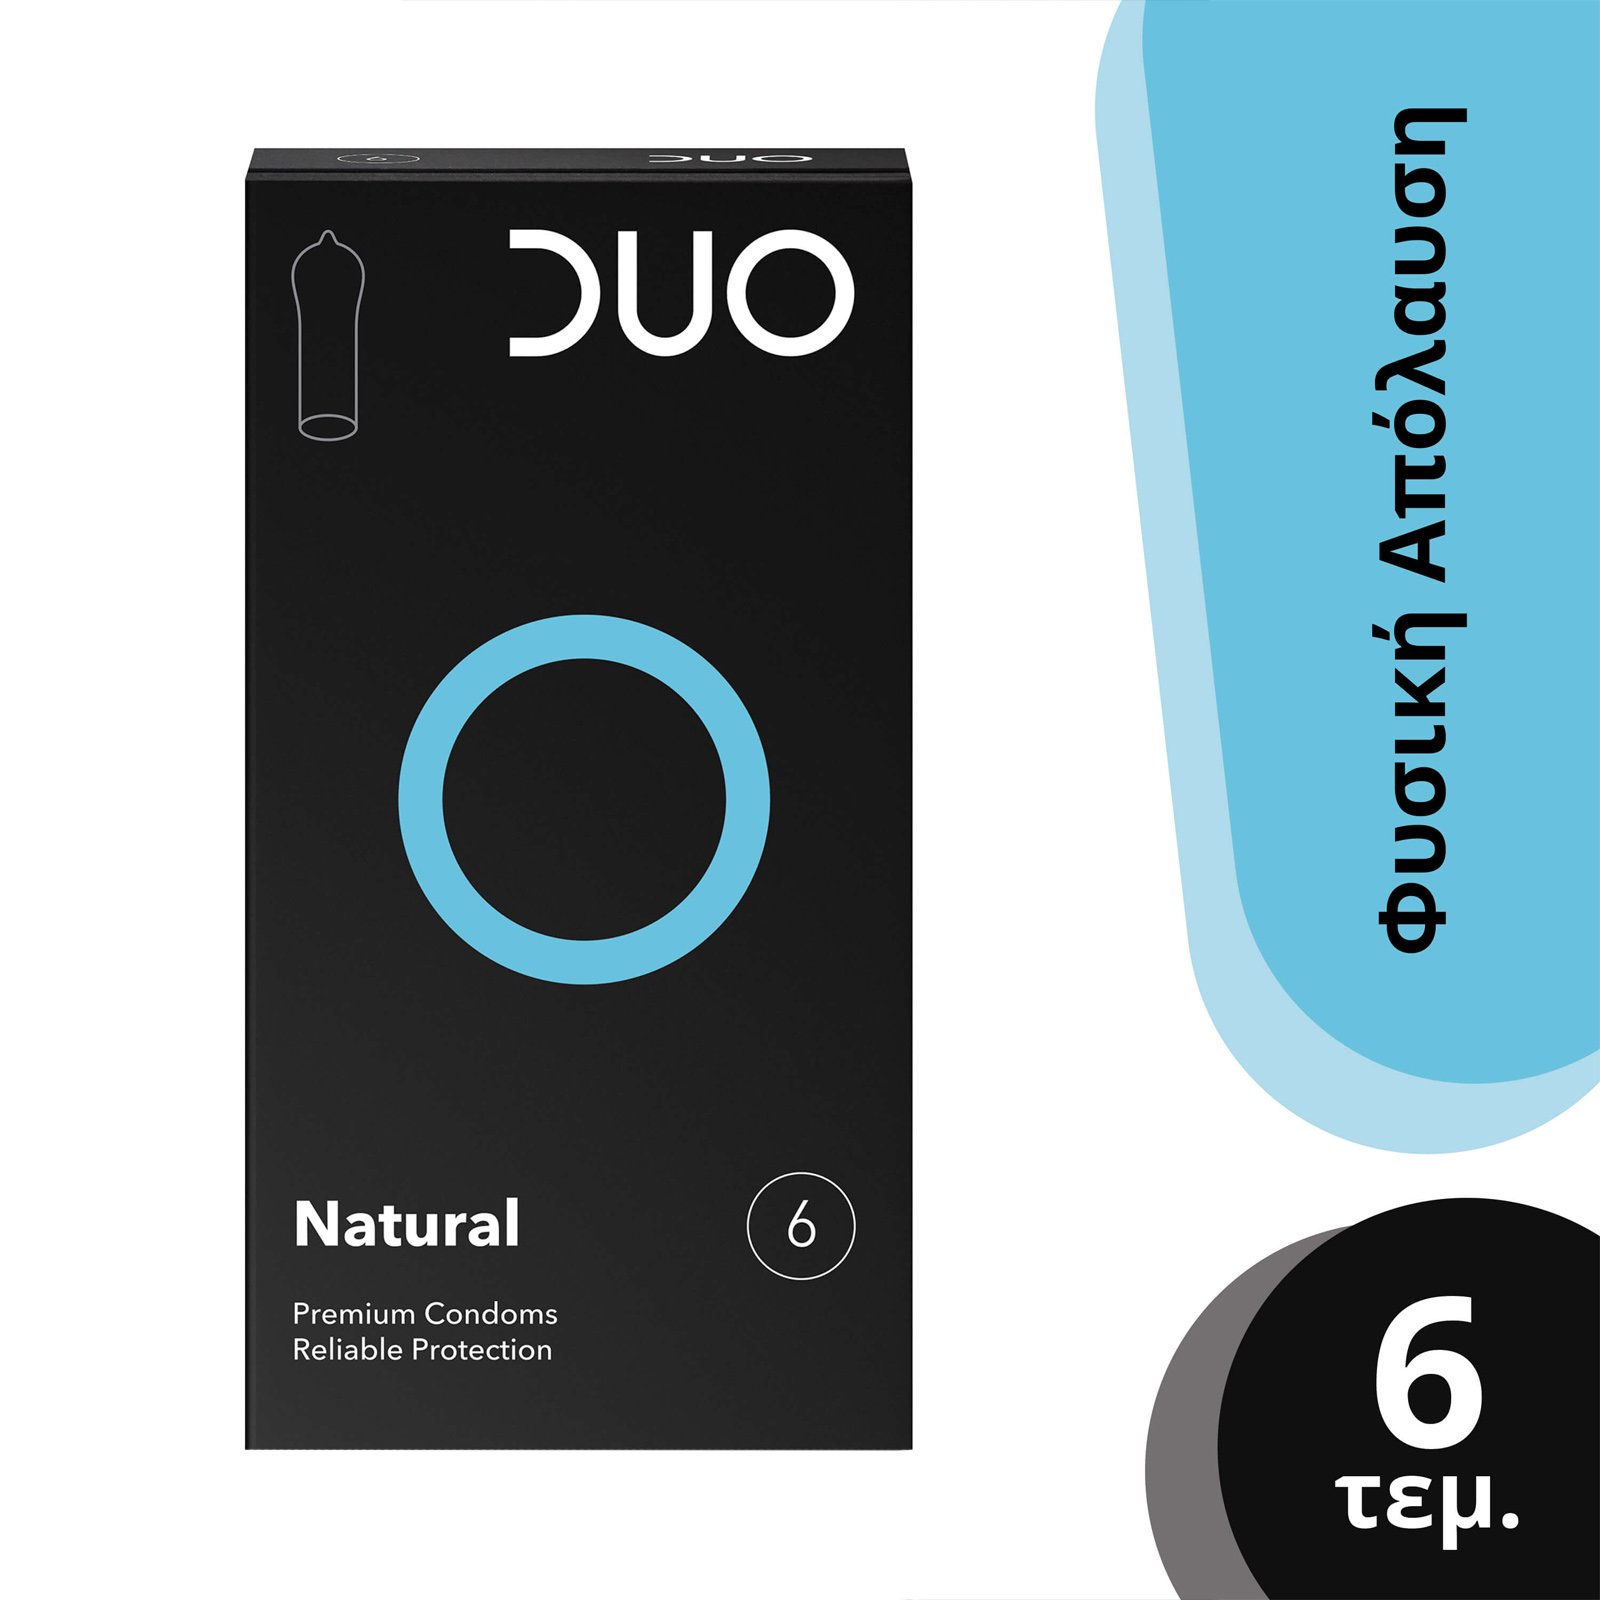 Duo Duo Natural Premium Condoms Φυσικό Προφυλακτικό για να Νιώθετε Ασφαλής σε Κάθε Περίσταση 6 Τεμάχια